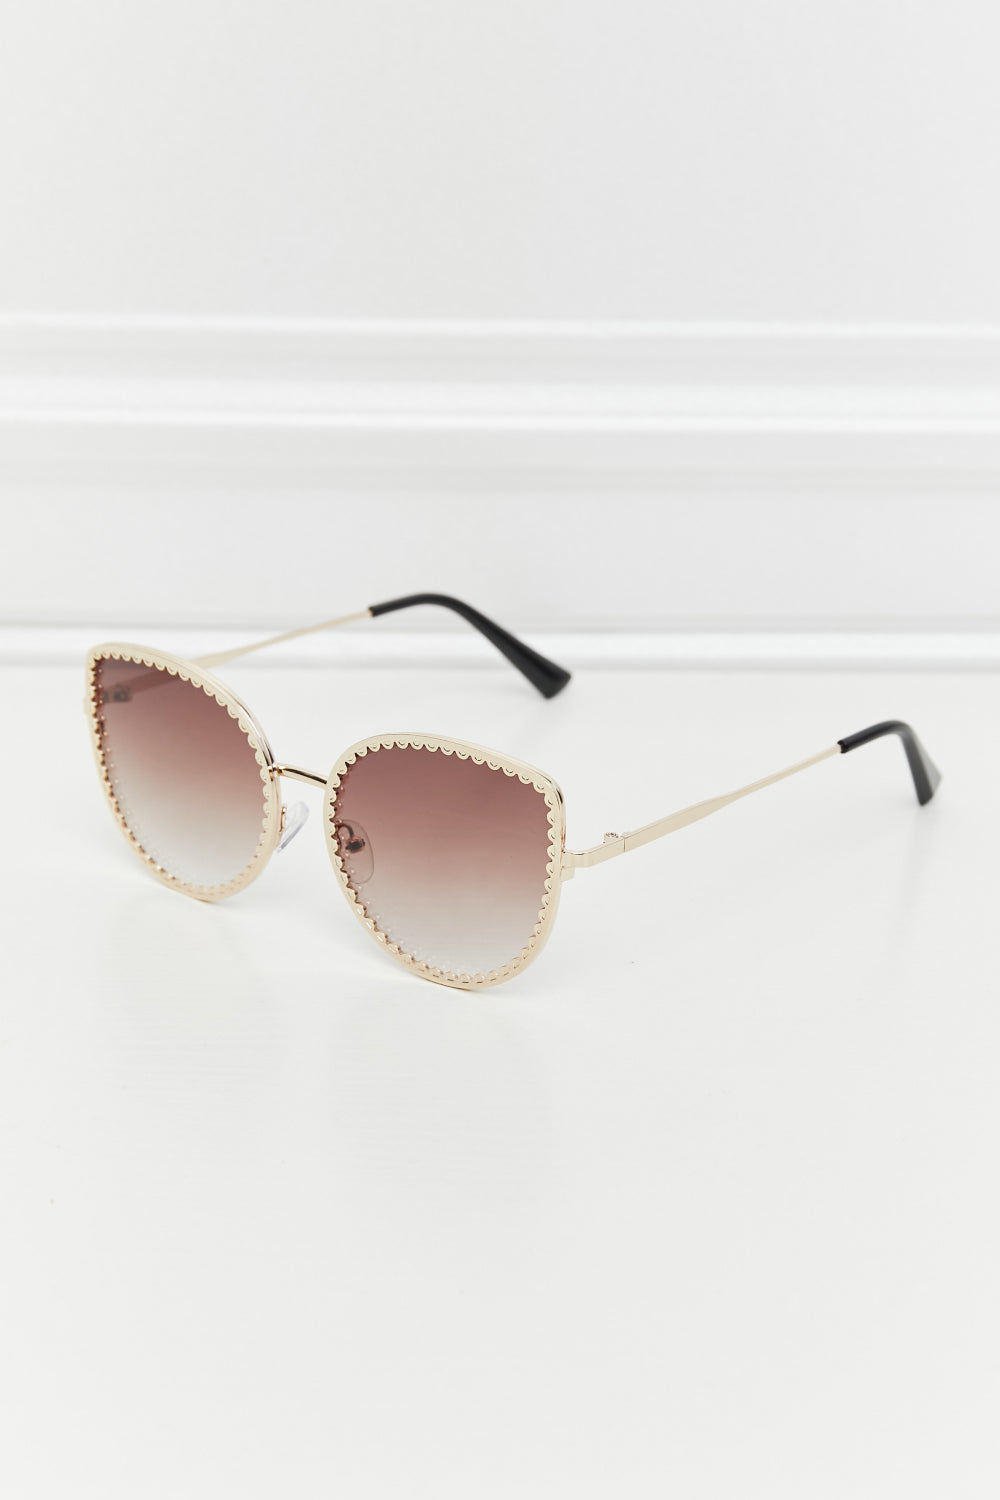 Full Rim Metal Frame Sunglasses Black One Size Sunglasses by Vim&Vigor | Vim&Vigor Boutique